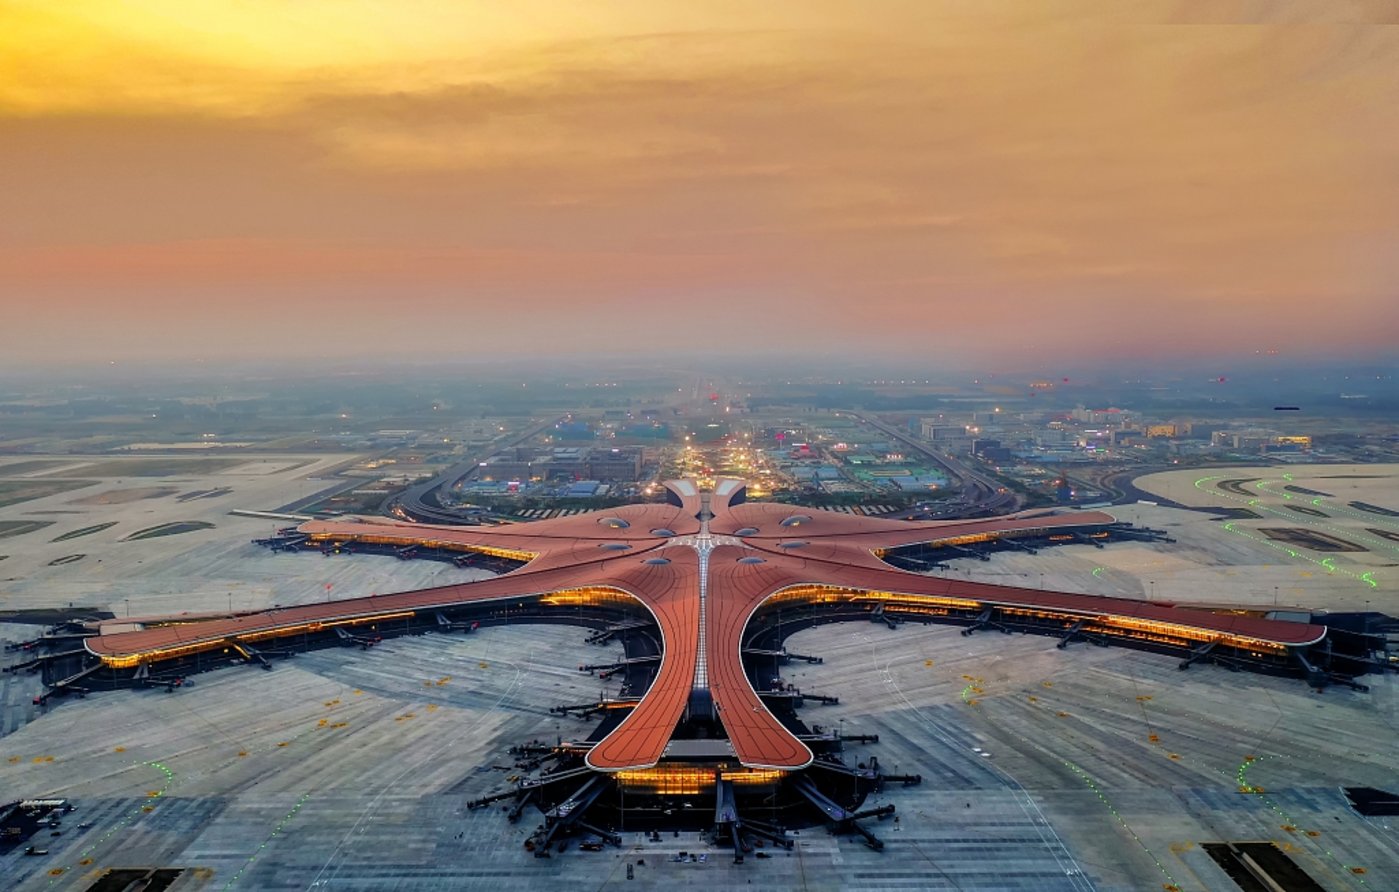 Прилет аэропорт пекин. Аэропорт Пекин Дасин. Аэропорт Шоуду Пекин. Пекин Дасин, Международный аэропорт, Китай. Международный аэропорт Пекина, терминал 3.